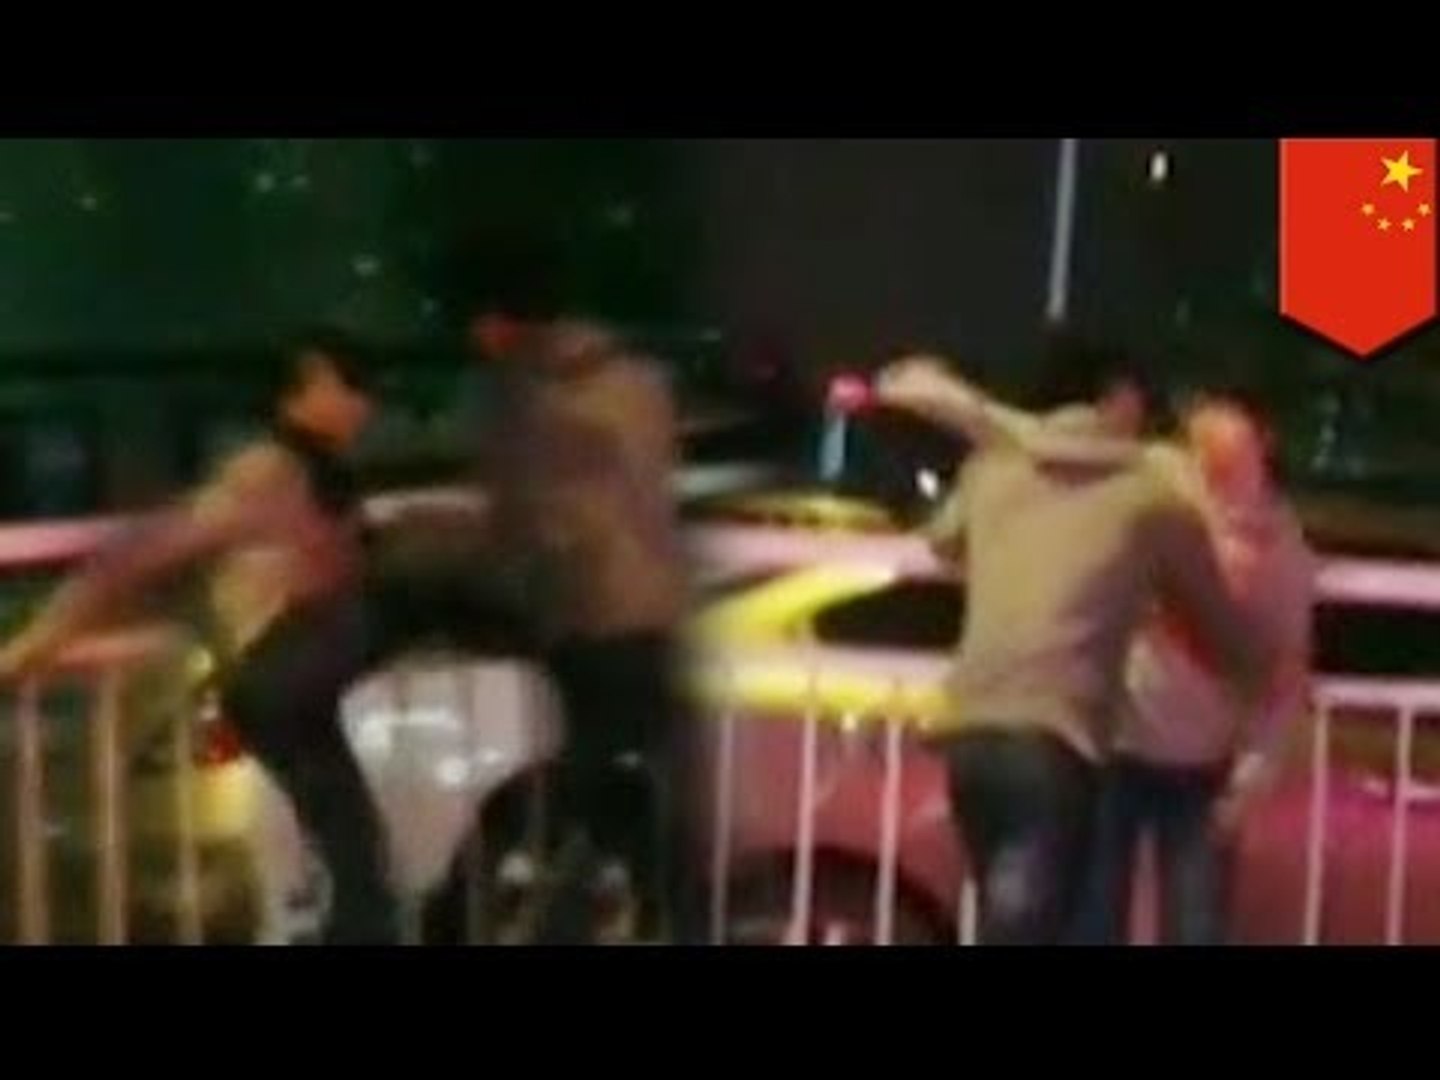 Abusive girlfriend: woman violently beats boyfriend - video Dailymotion